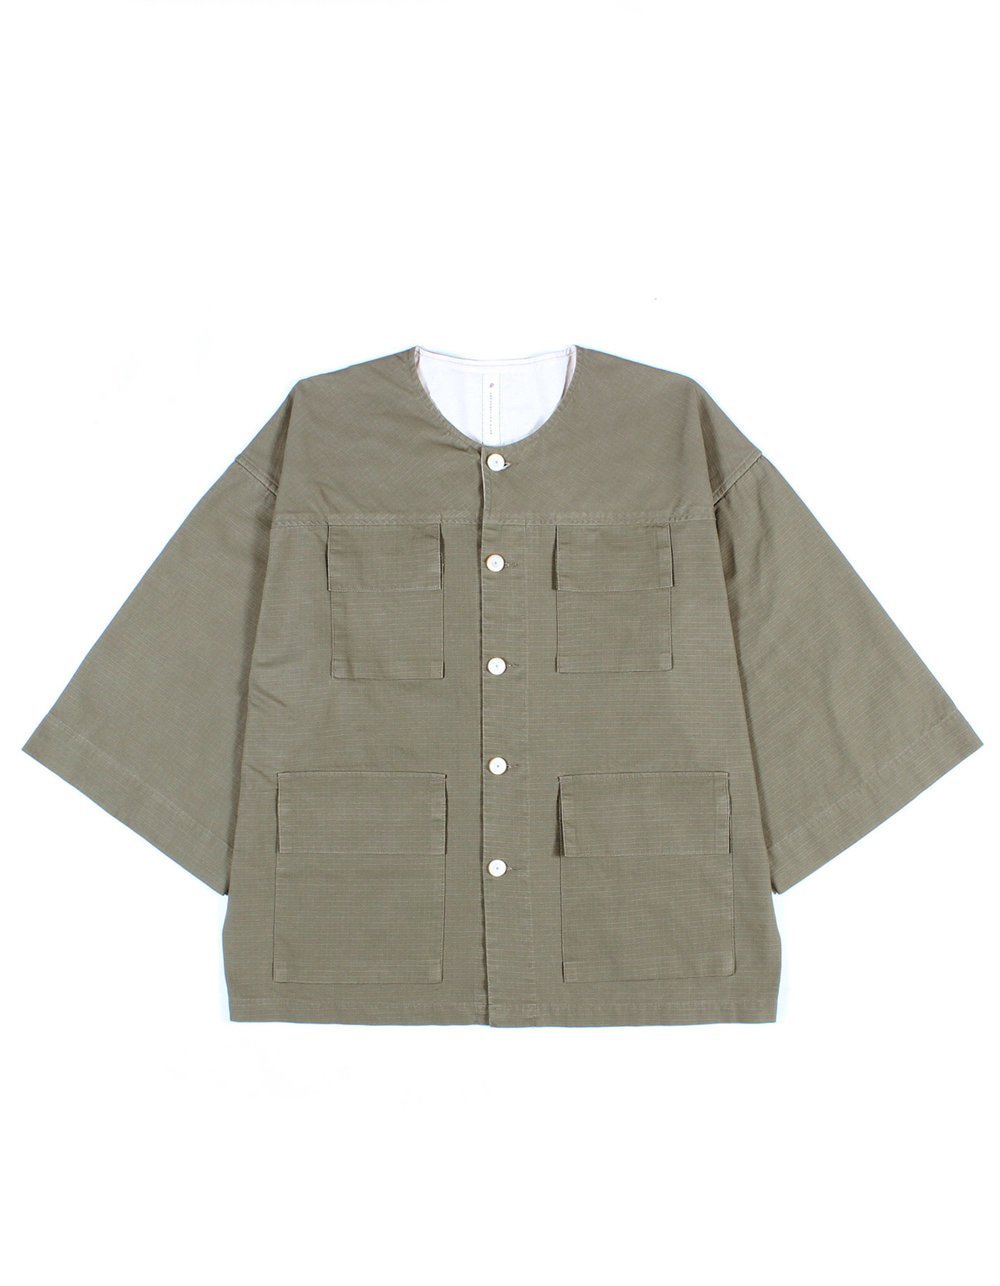 Prospective Flow Riku Jacket - Medium Size - tortoise general store